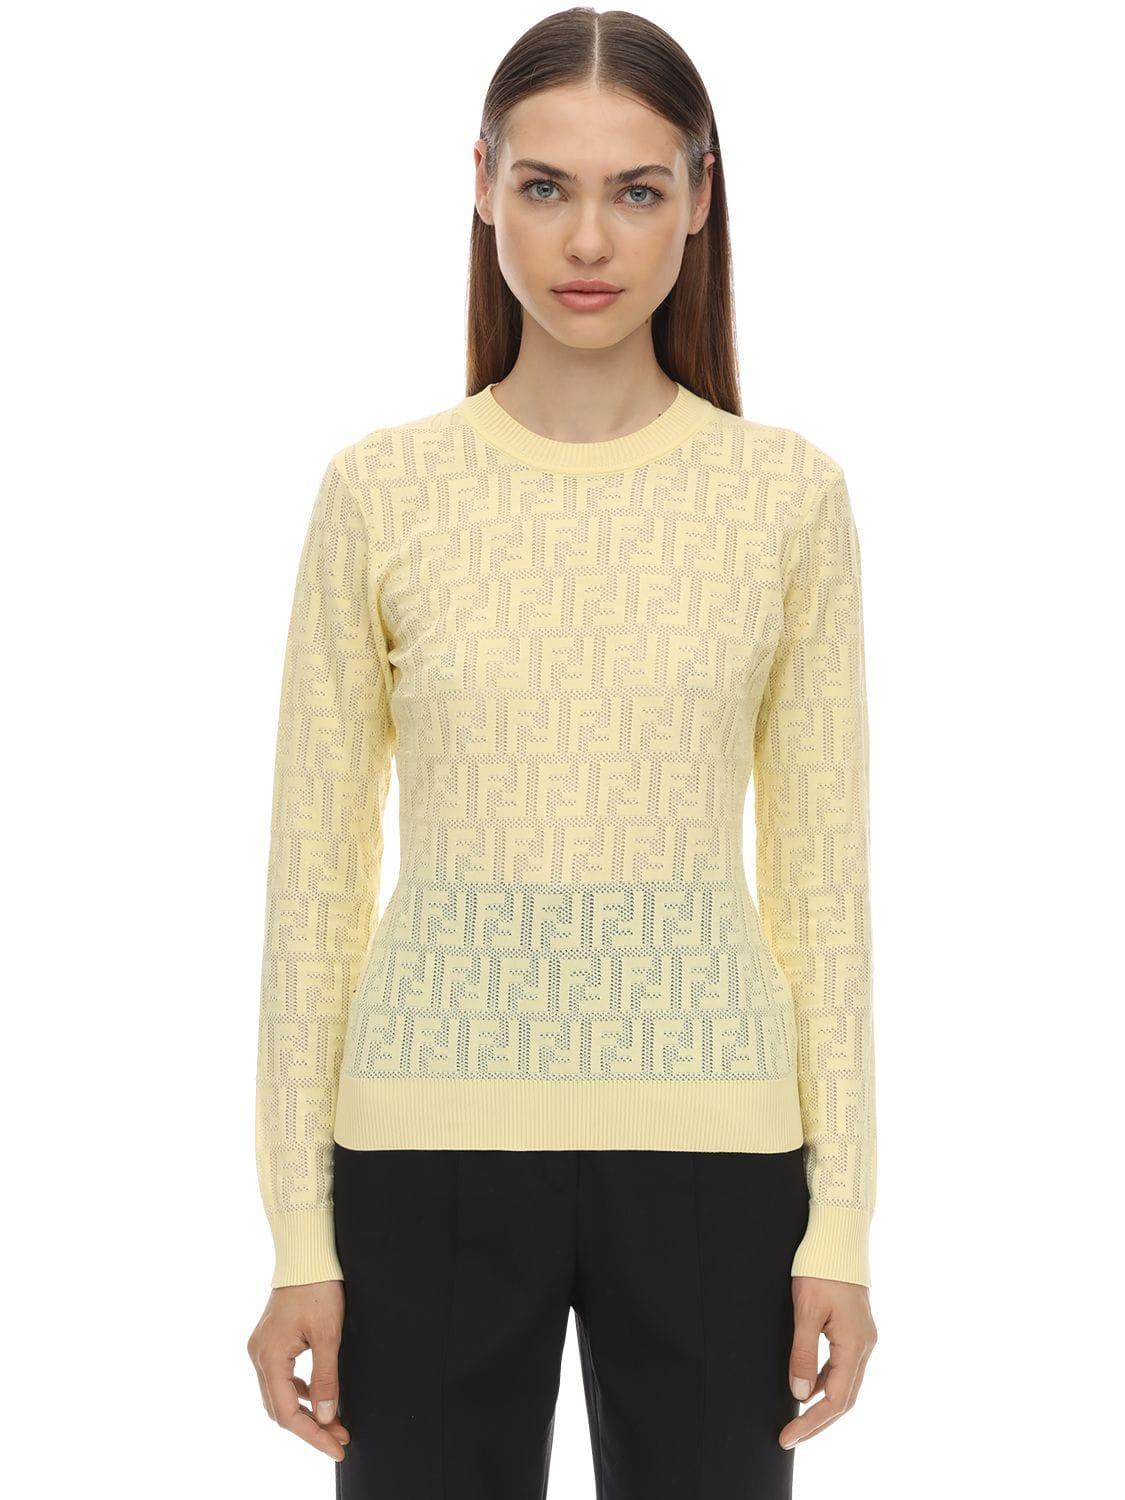 Fendi Logo Intarsia Knit Sweater in Yellow - Lyst